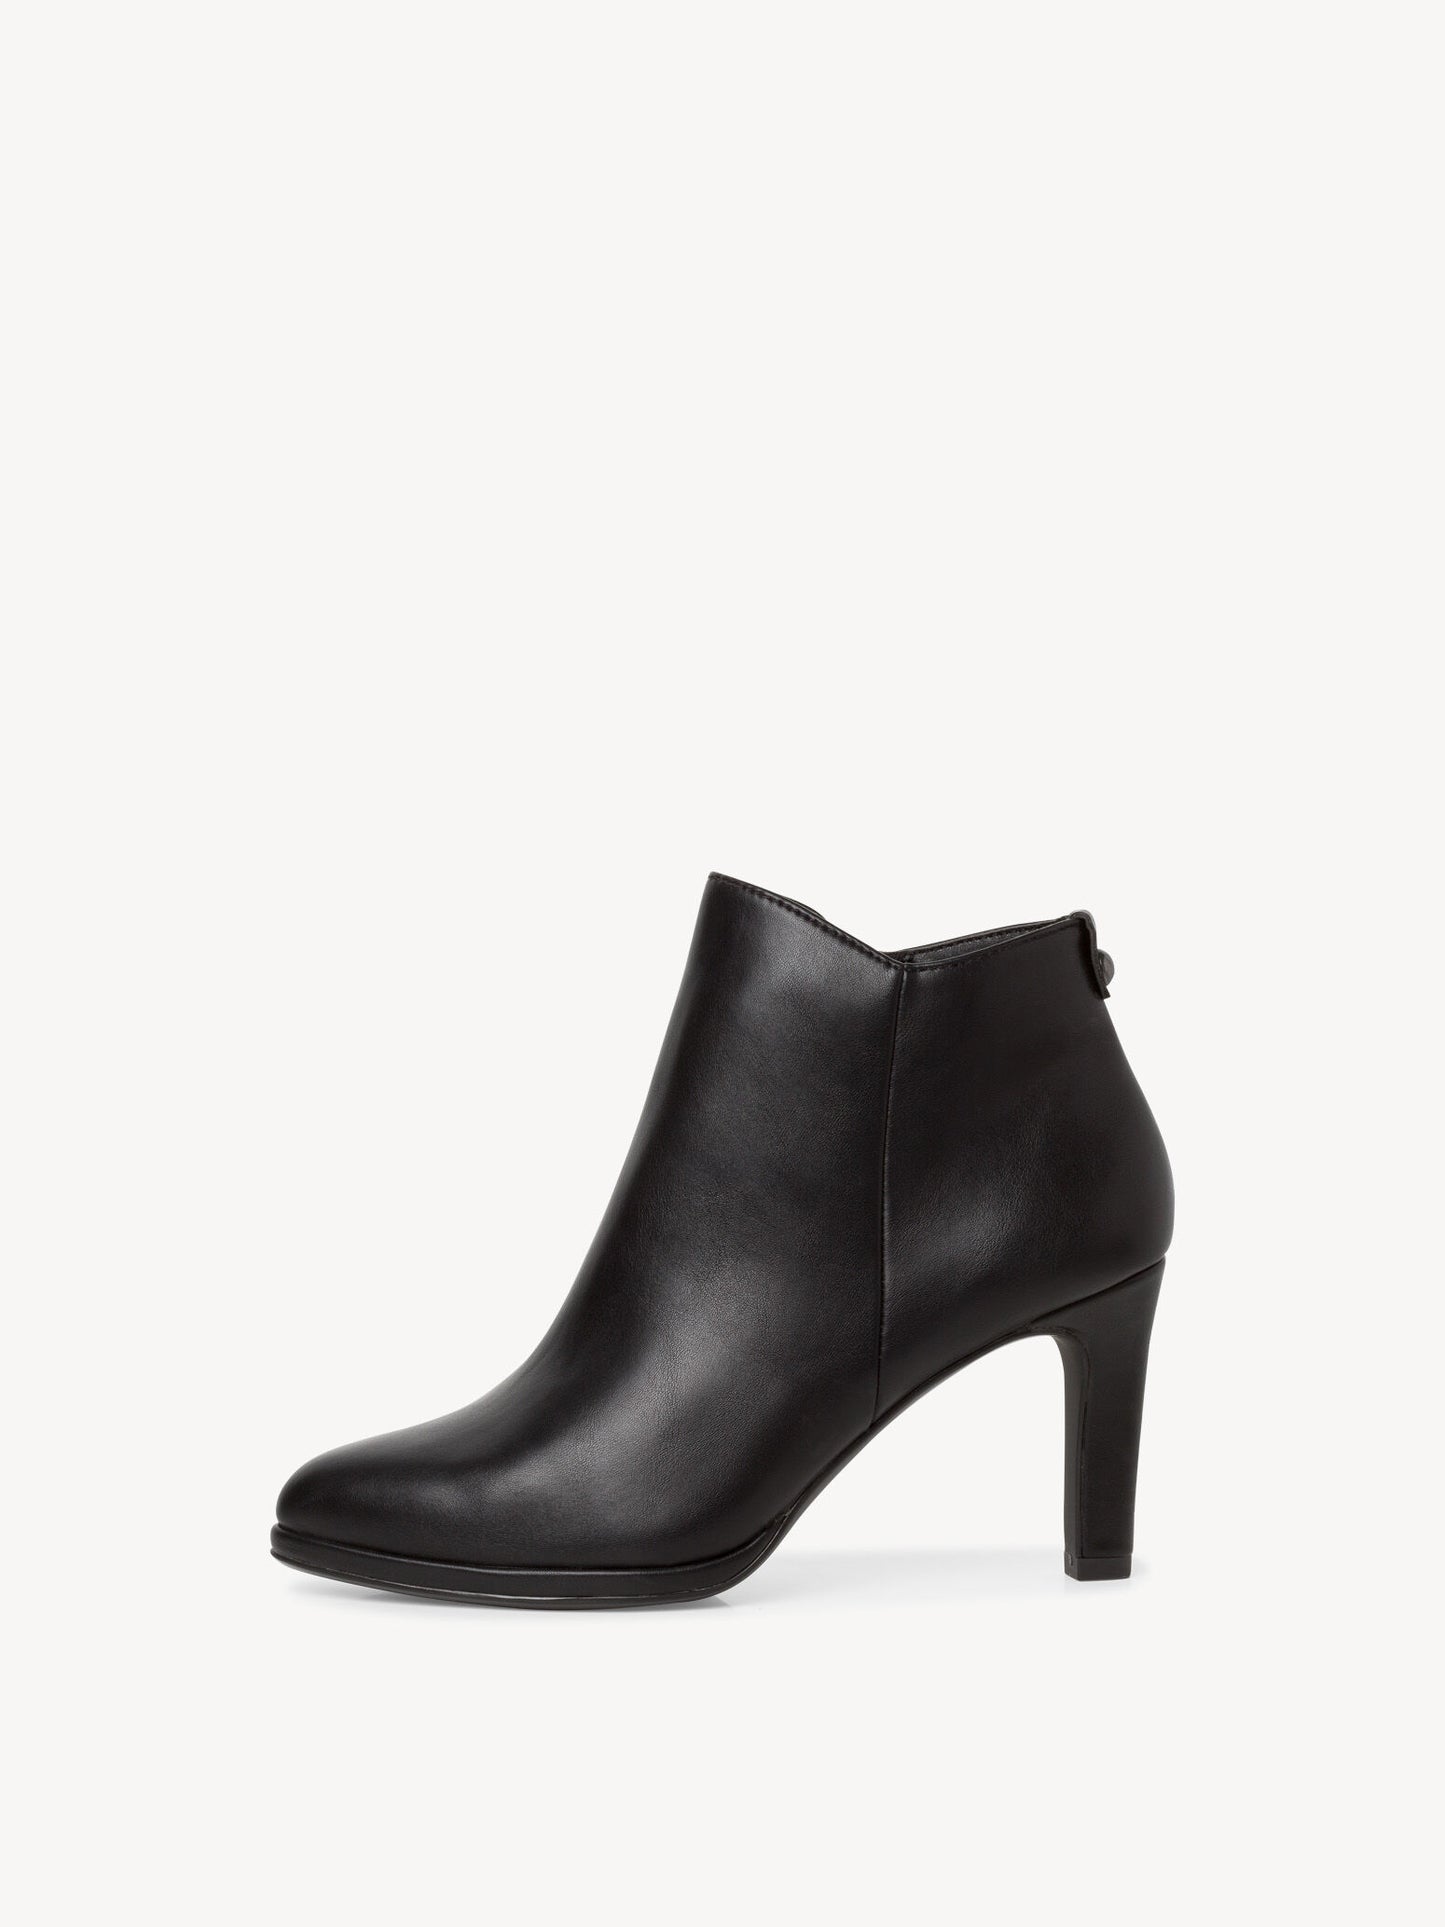 Vegan Leather Heeled Ankle Boots - Black